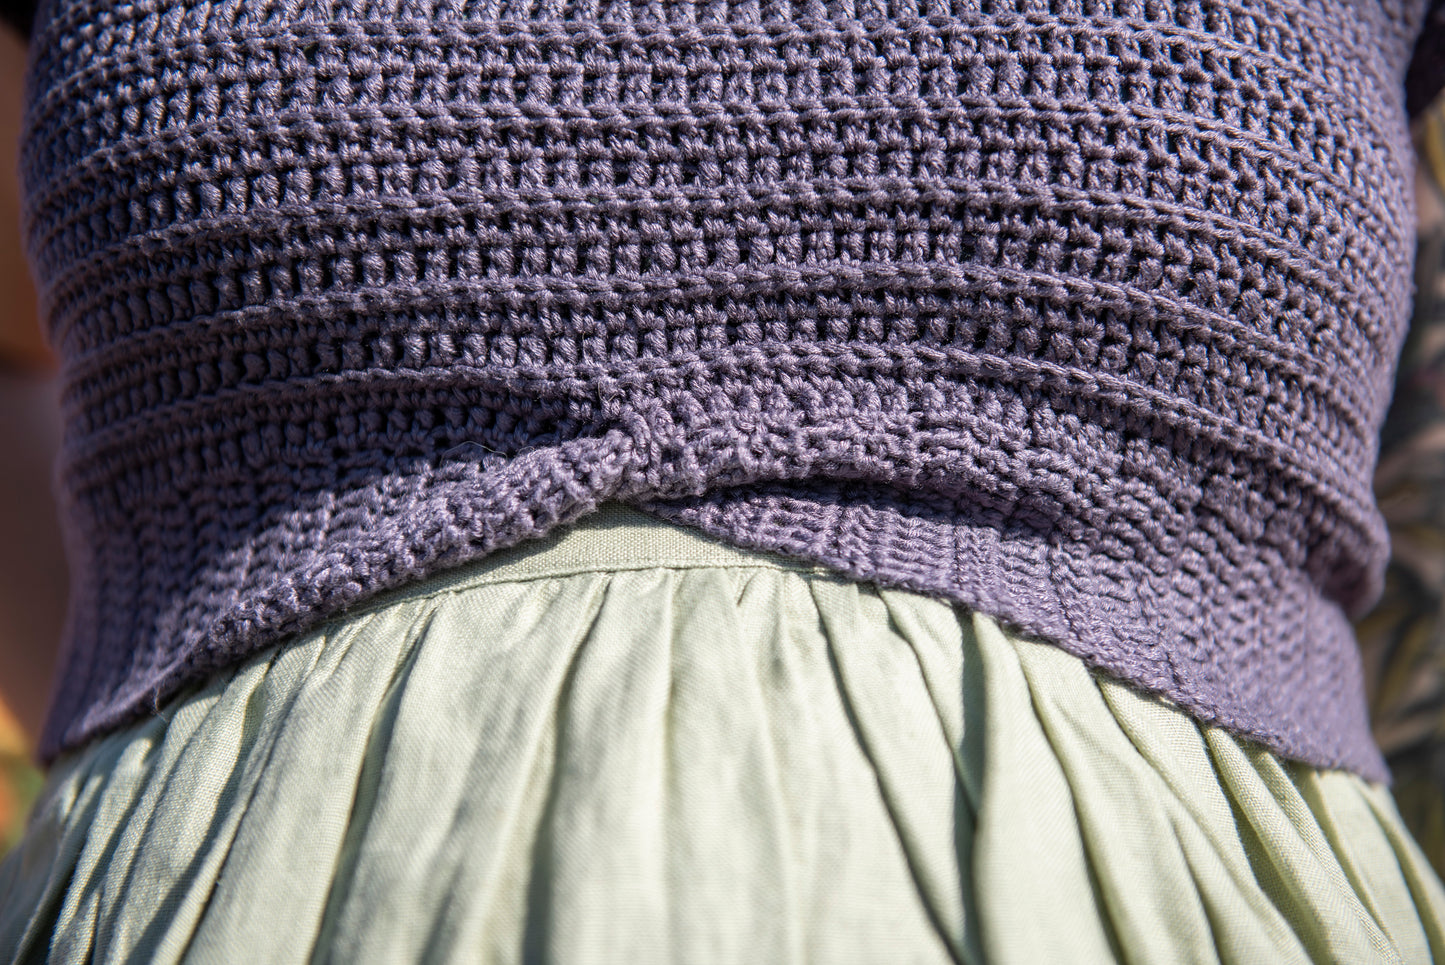 Crochet Pattern: The Chickadee Crop